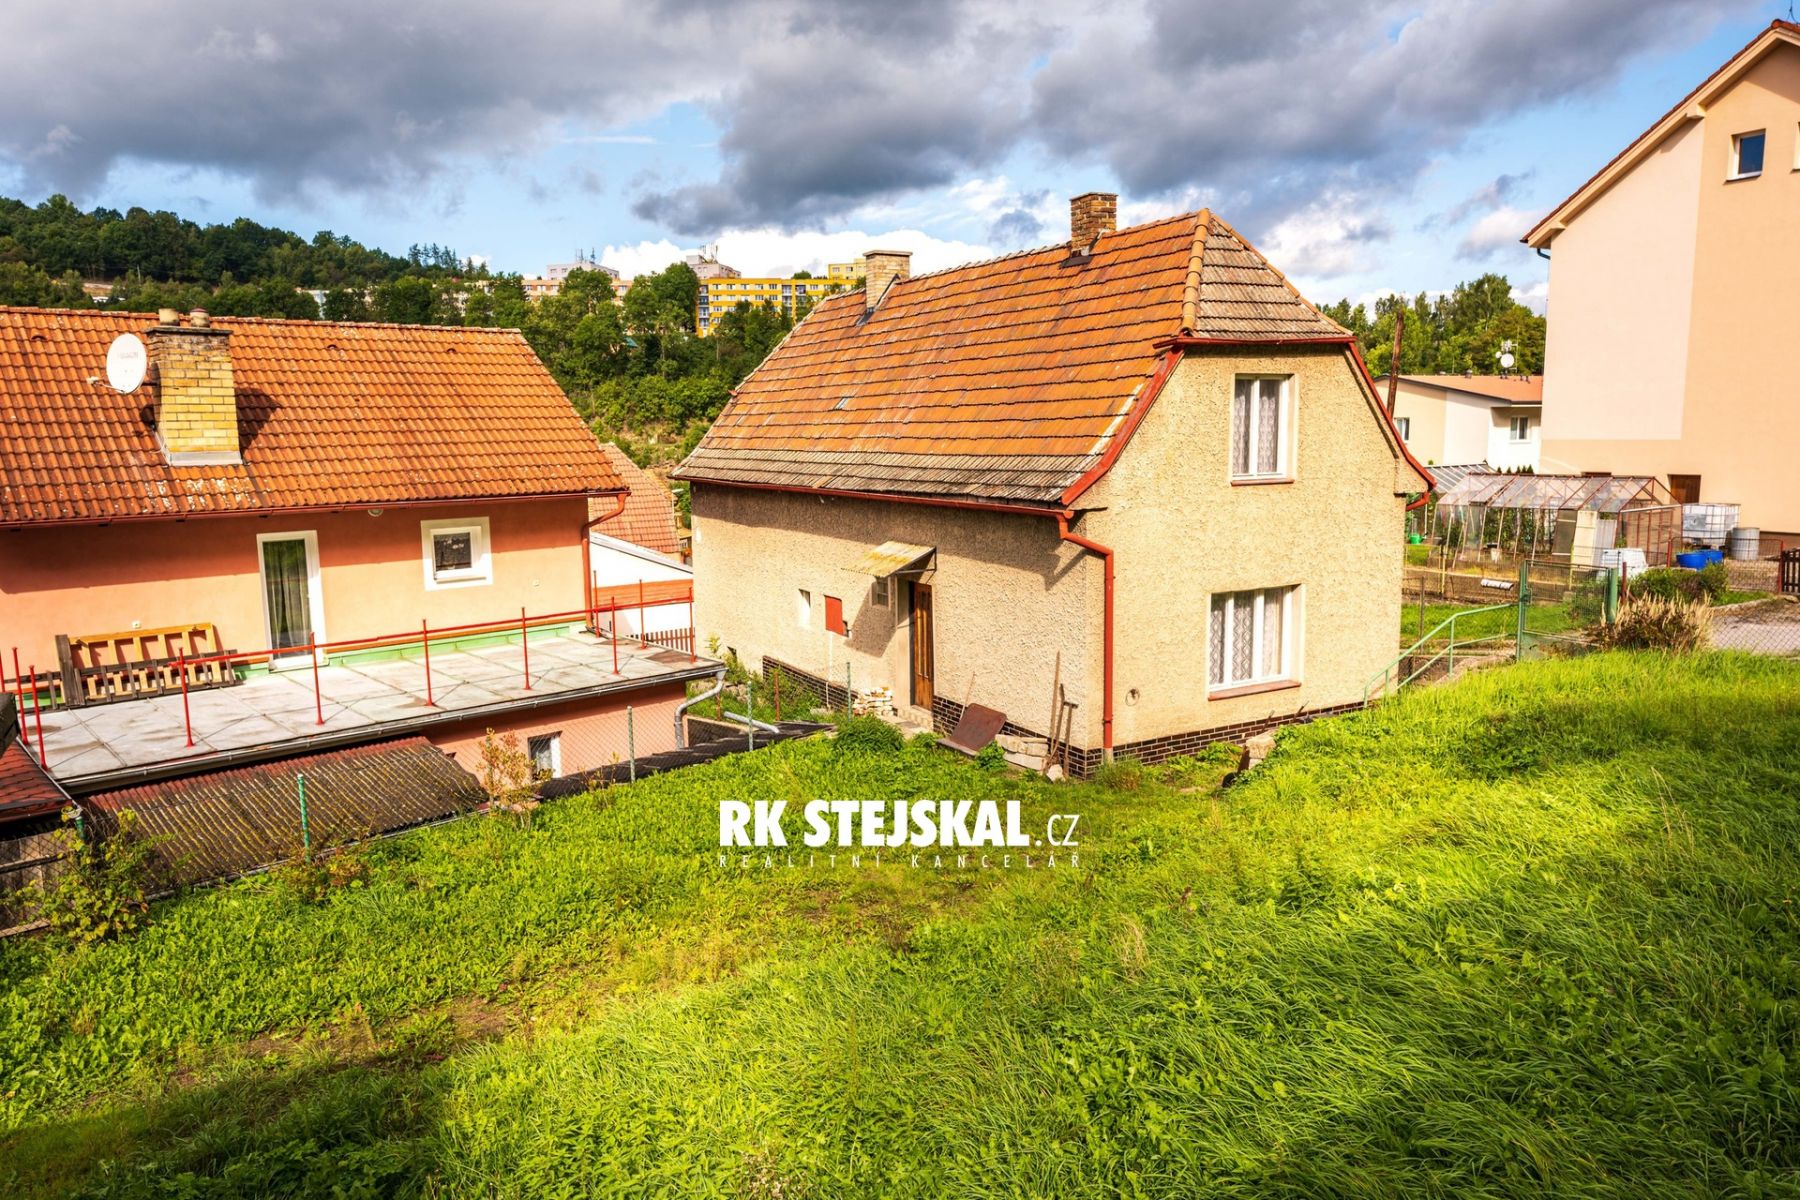 Rodinný dům s dvěma bytovými jednotkami a zahradou, celk. plocha 435m2, Český Krumlov - Nové Spolí, obrázek č. 1